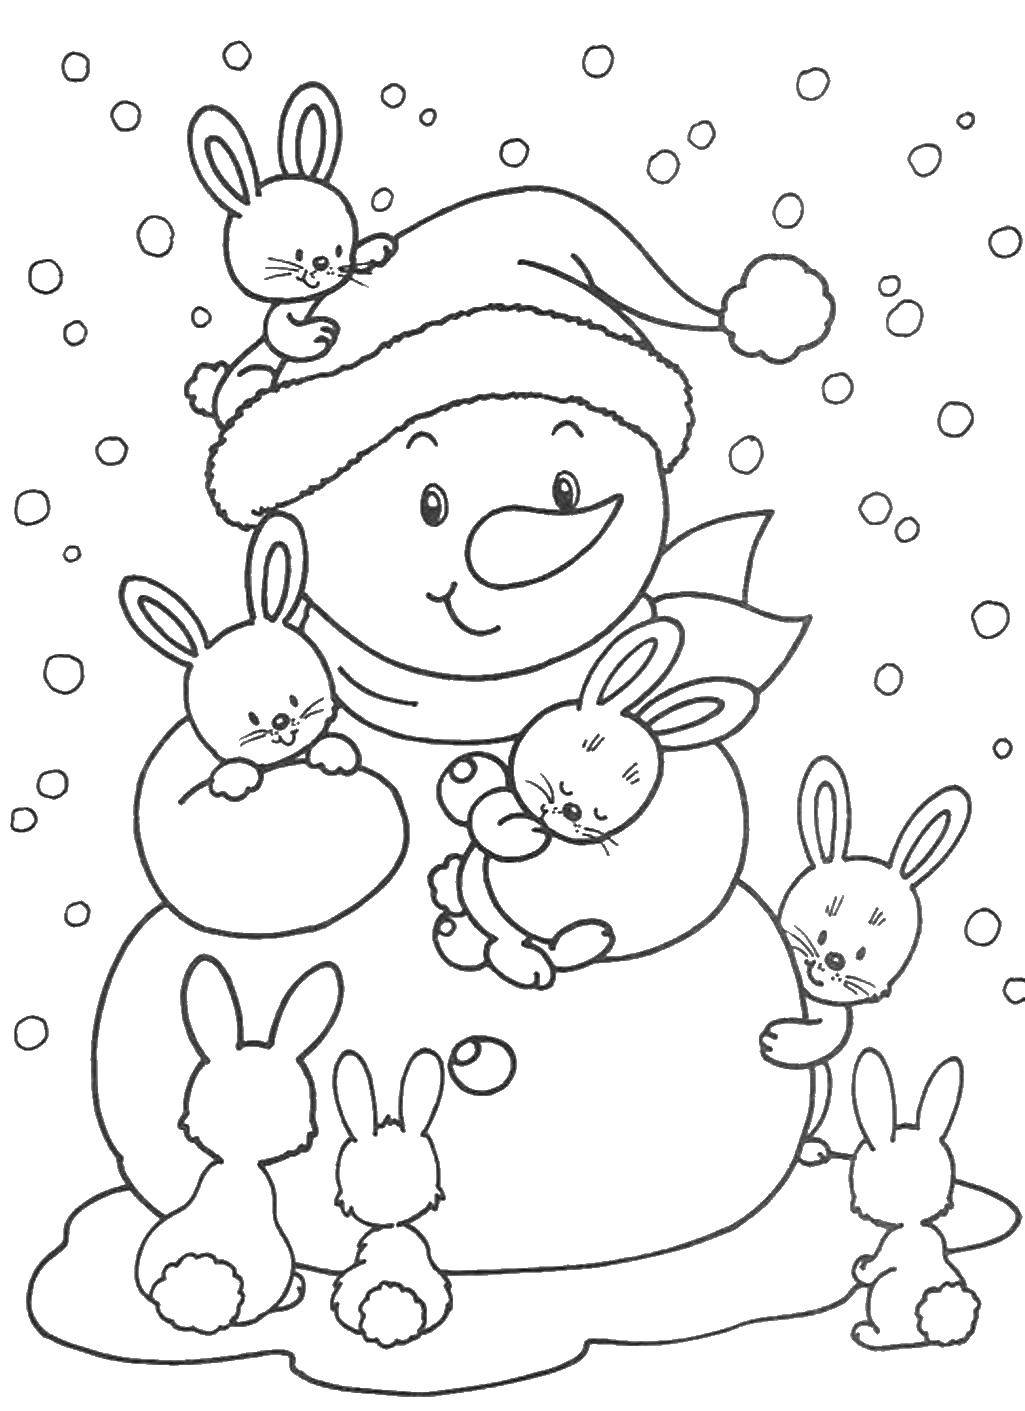 Название: Раскраска Зайчики вокруг снеговика. Категория: раскраски зима. Теги: зима, снеговик, зайчики.